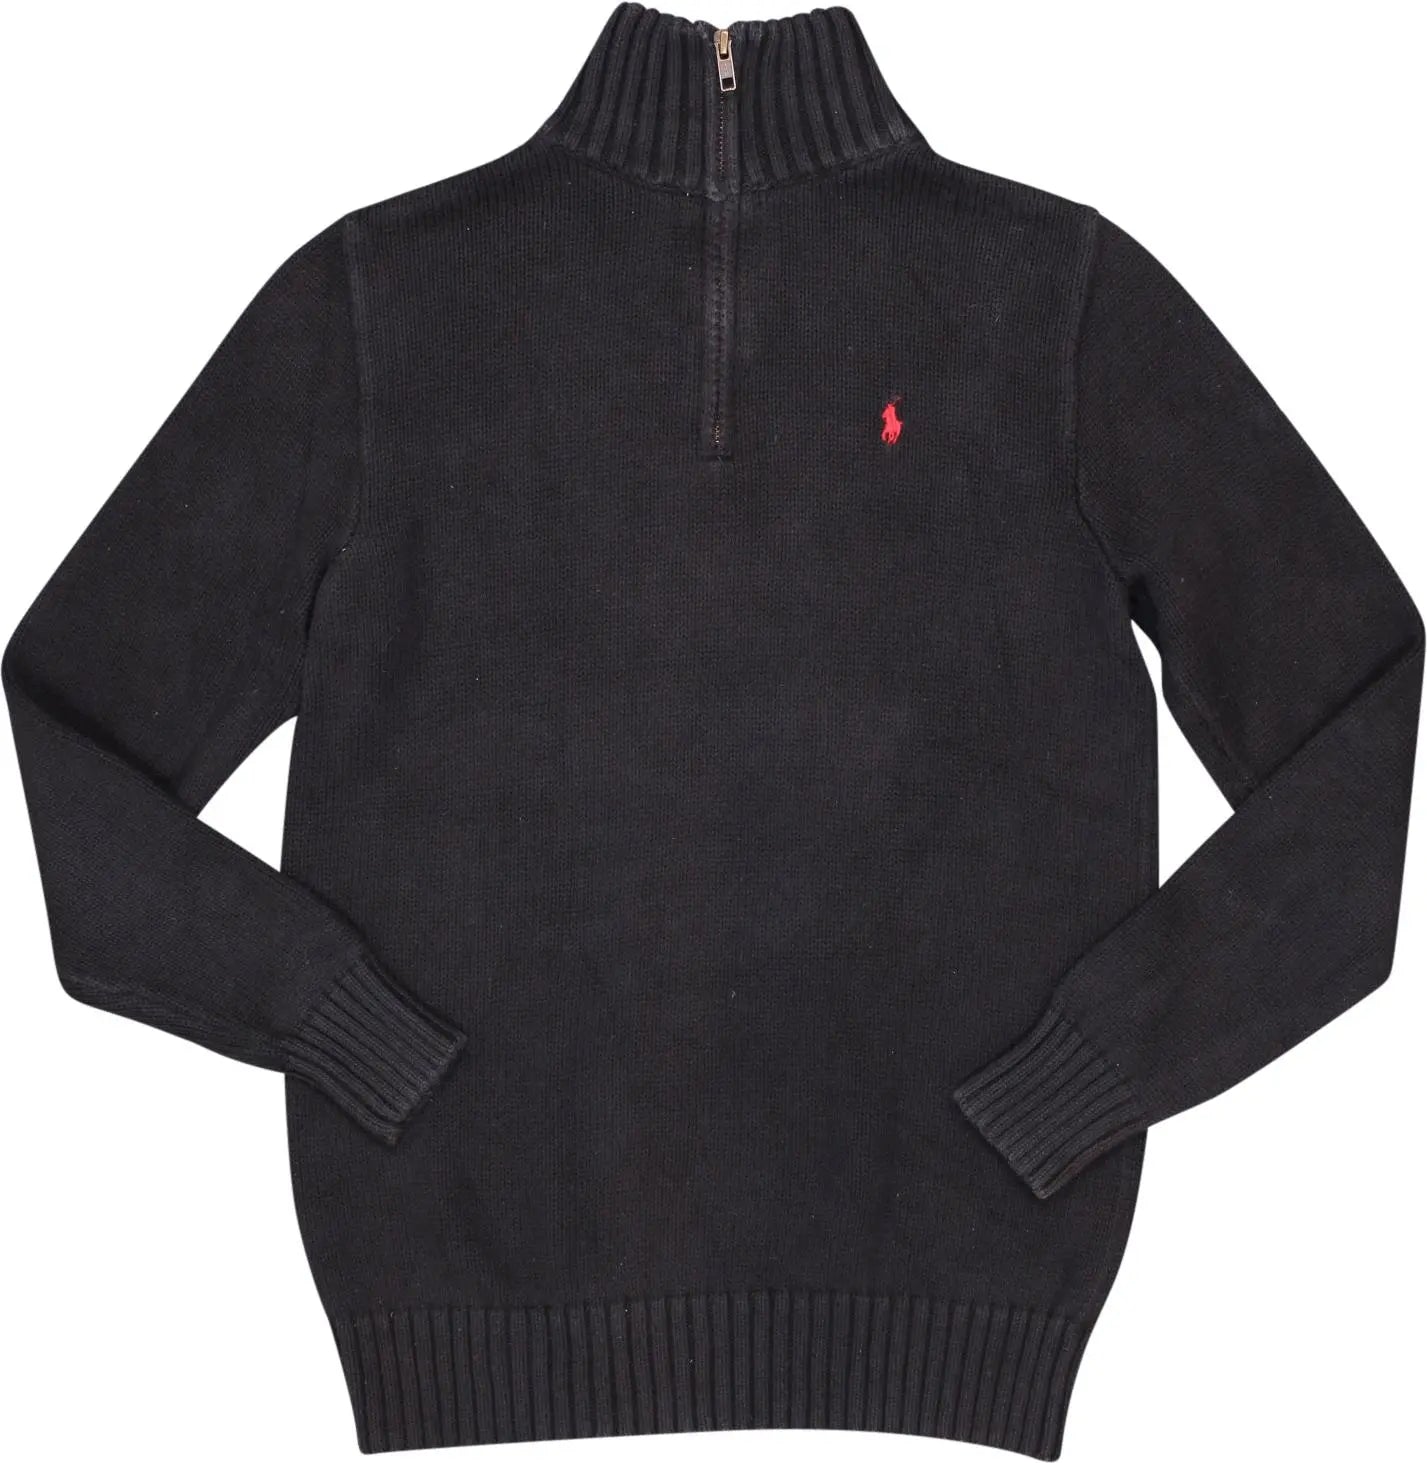 Ralph Lauren - Black Sweater by Ralph Lauren- ThriftTale.com - Vintage and second handclothing